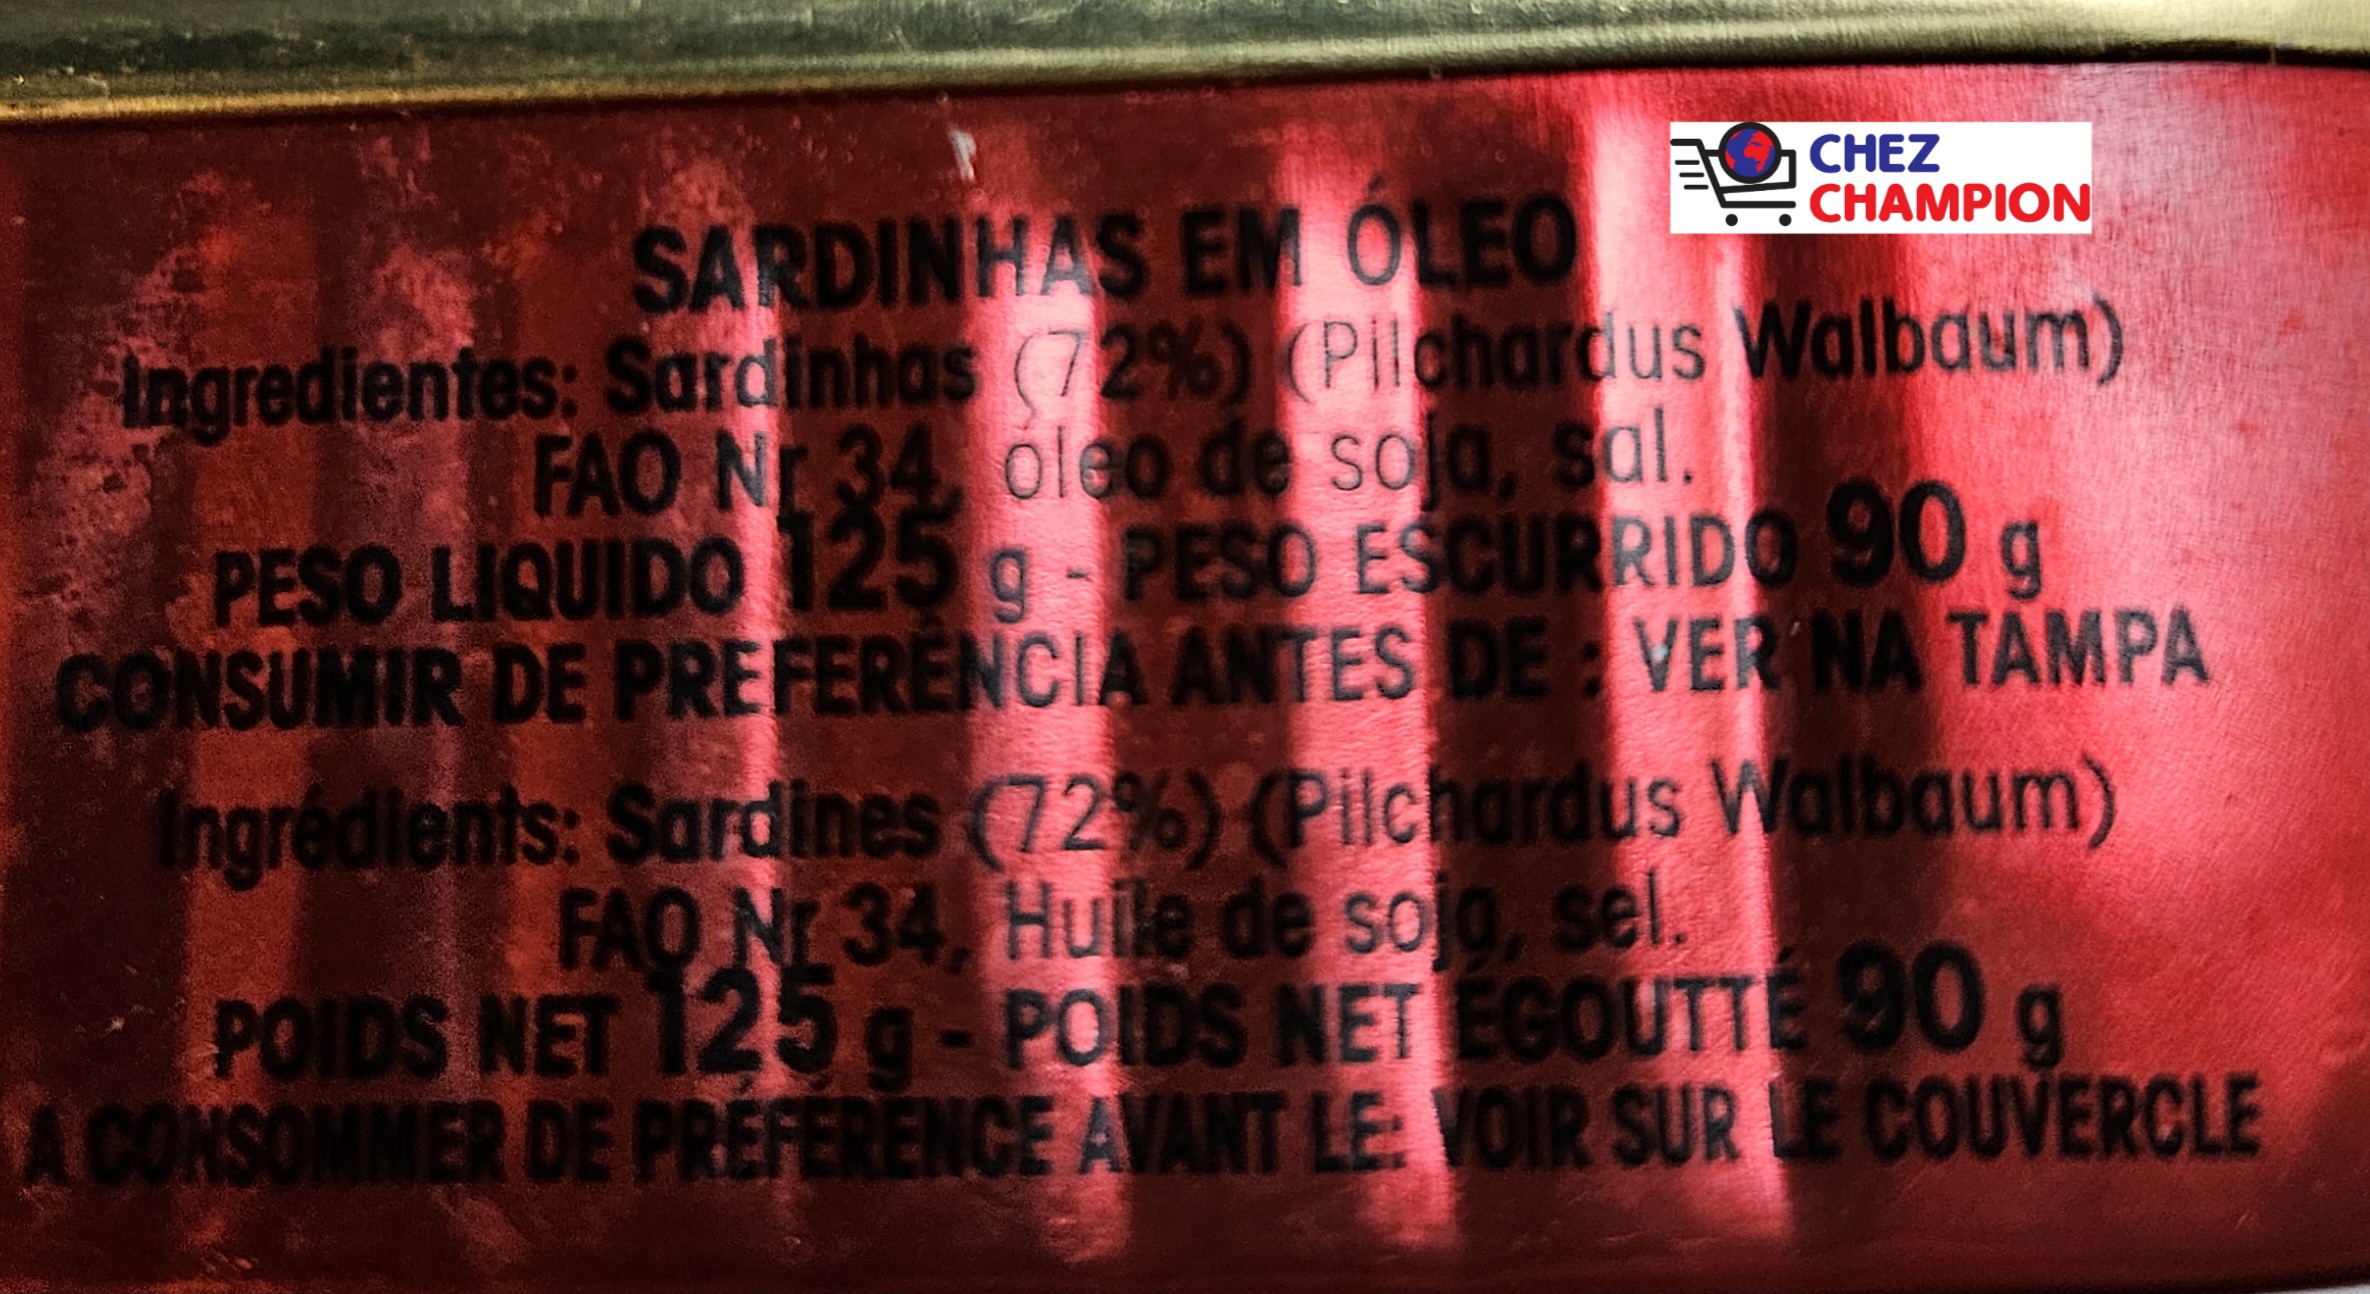 Anny sardines in oil – sardines à l’huile – 125g